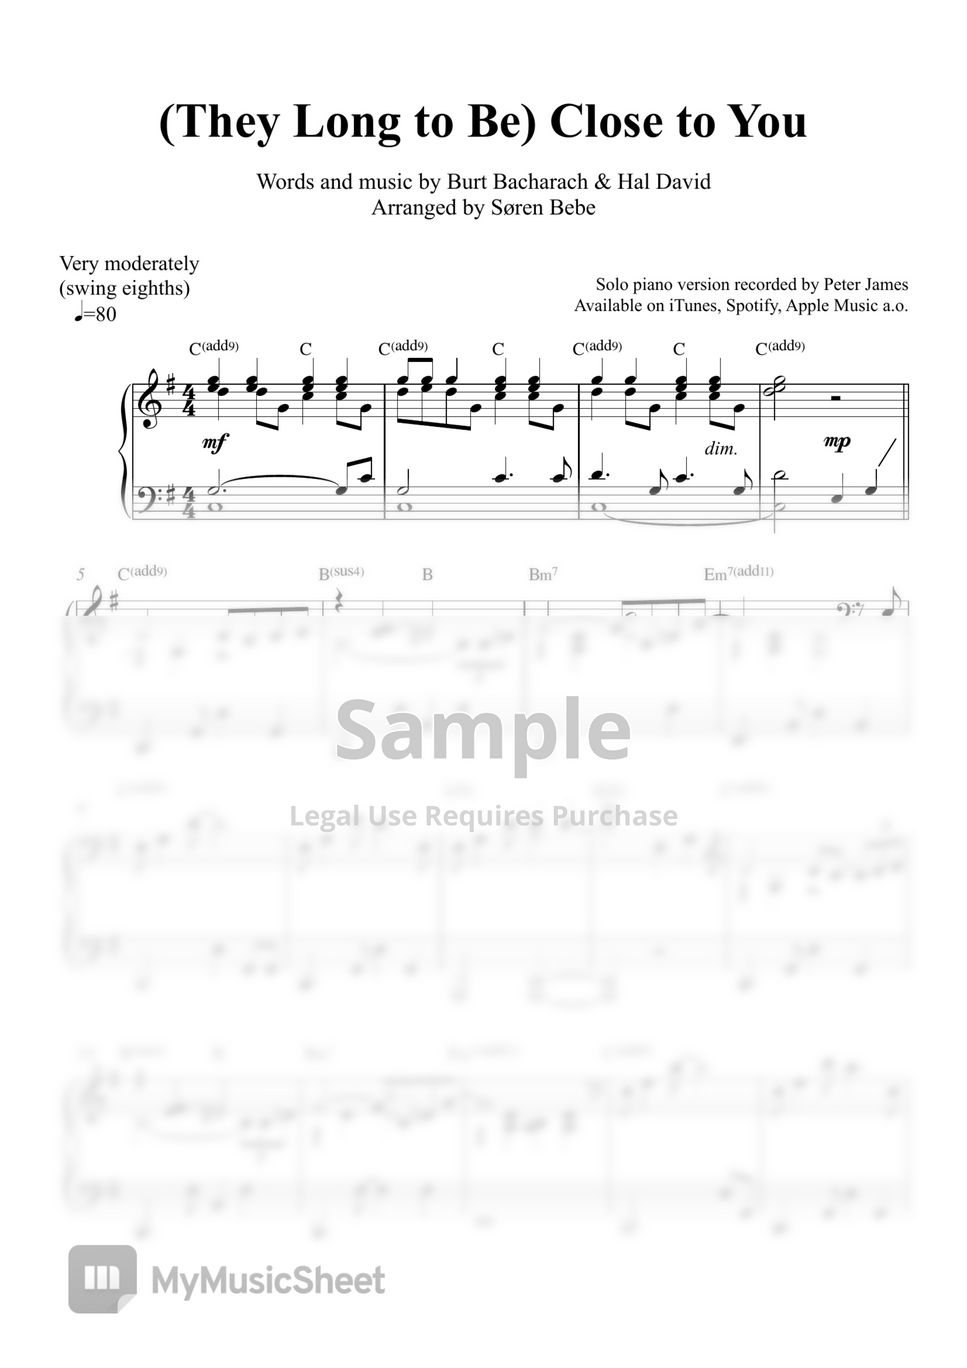 The Carpenters Rainy Days and Mondays Sheet Music (Easy Piano